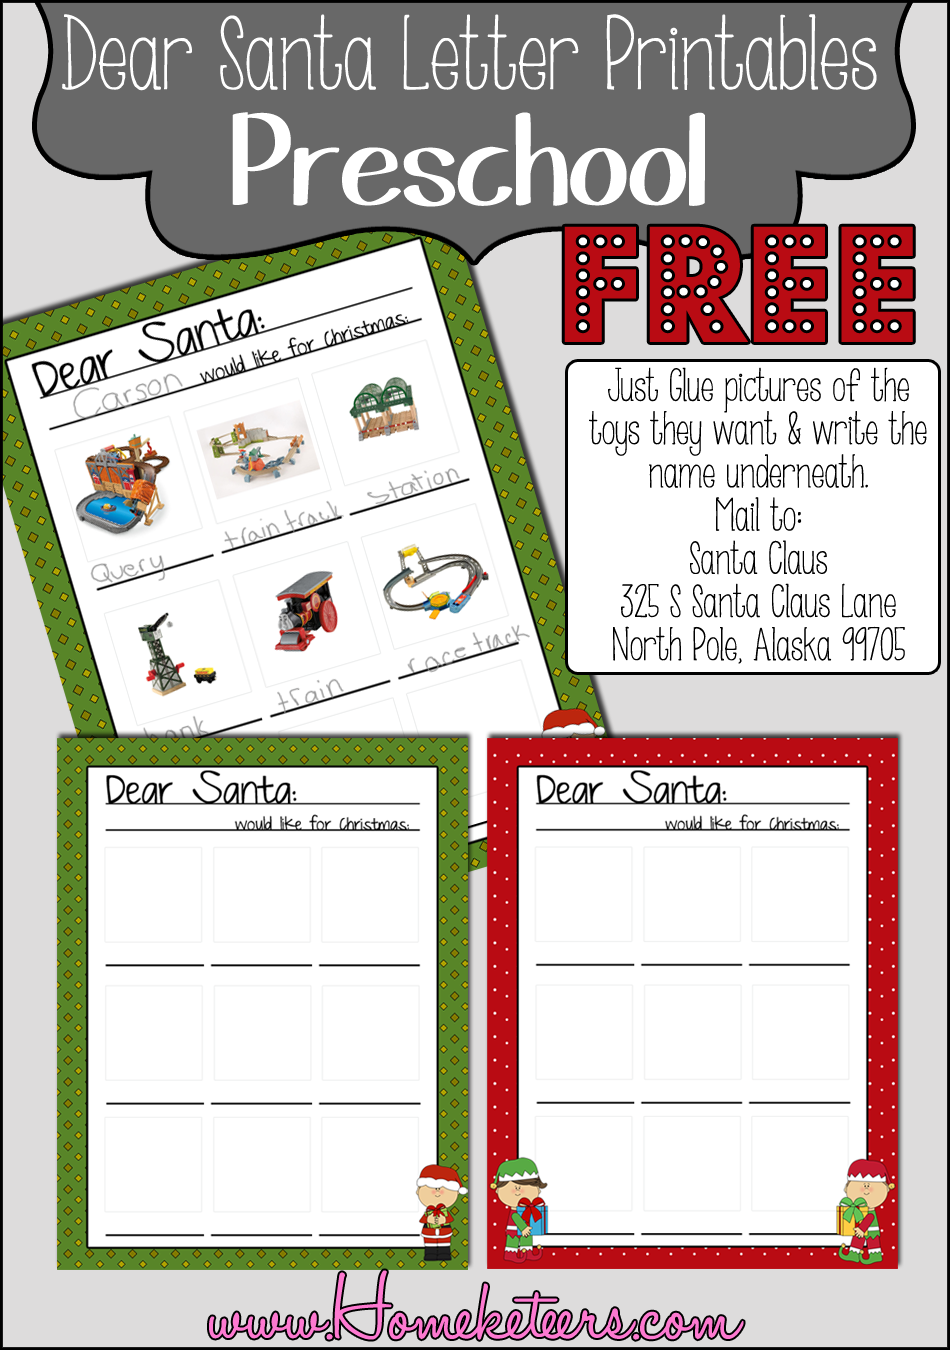 Dear Santa Letters ~ FREE Printables